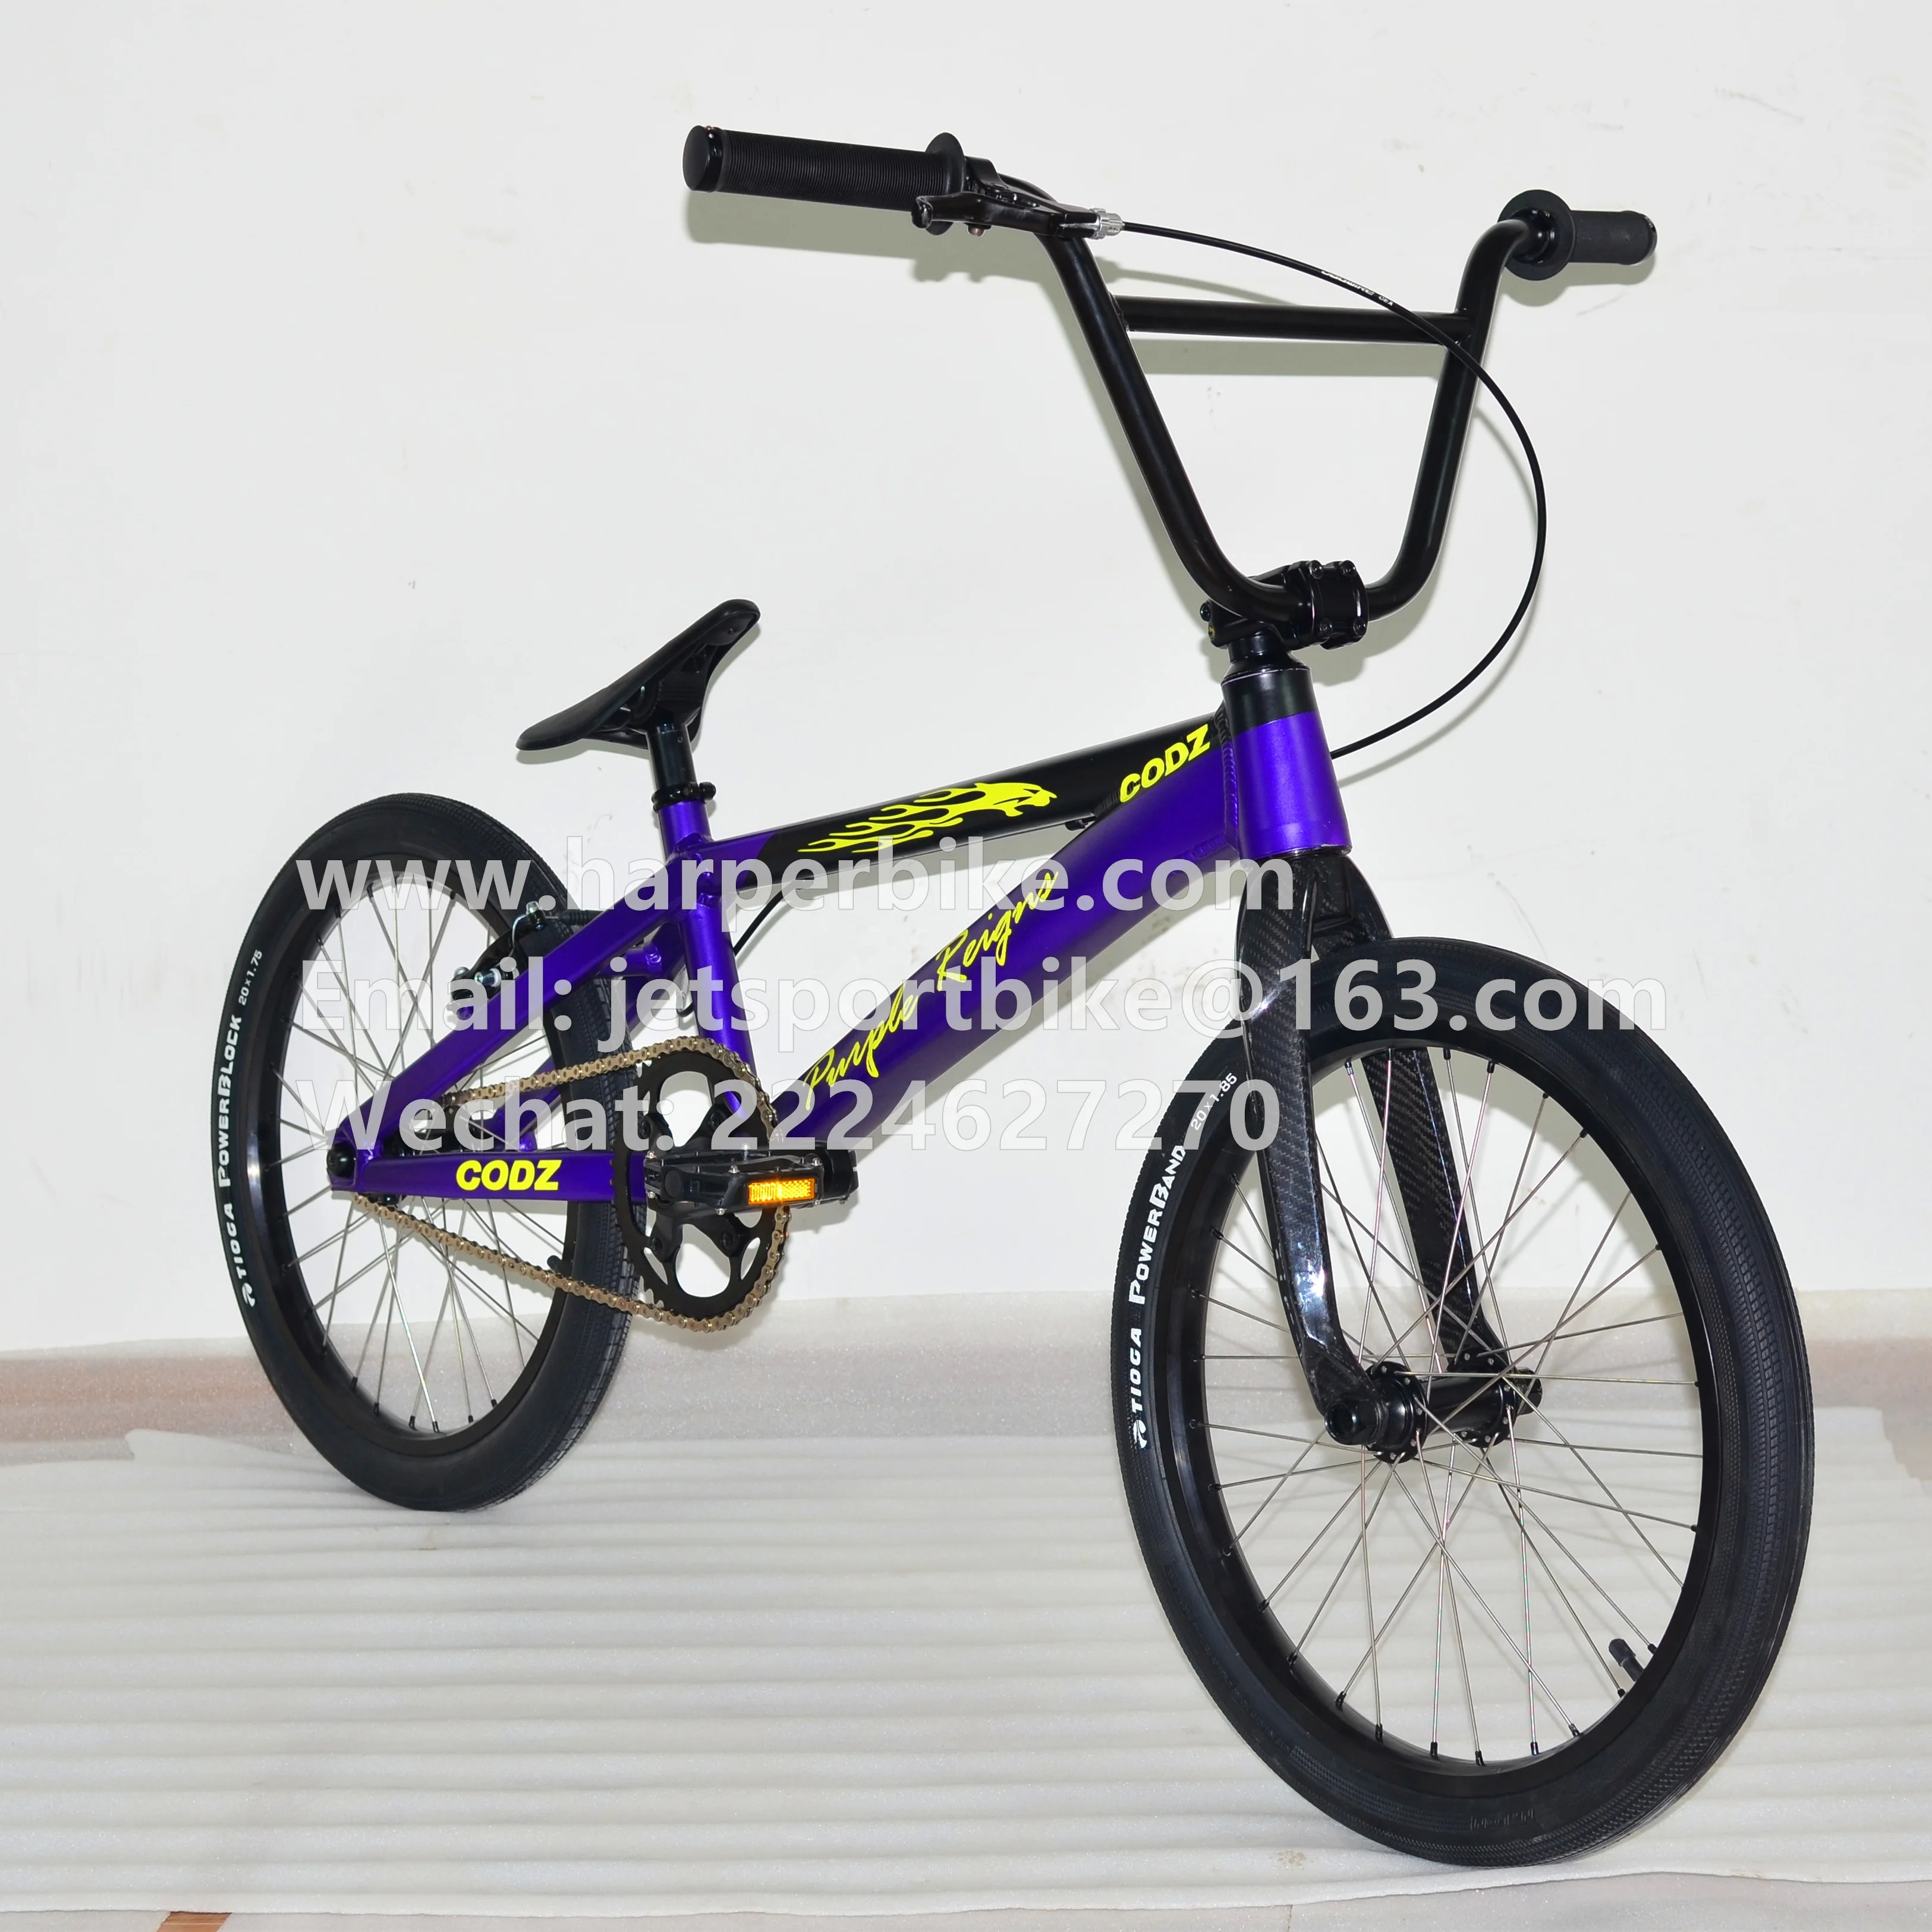  SWORDlimit 20 pulgadas BMX Bicicletas para adultos hombres  Freestyle Jumping BMX, 9 pulgadas Cr-Mo manillar – Cromo-Molibdeno marco de  acero y tenedor, neumáticos 20 × 2.3 pulgadas